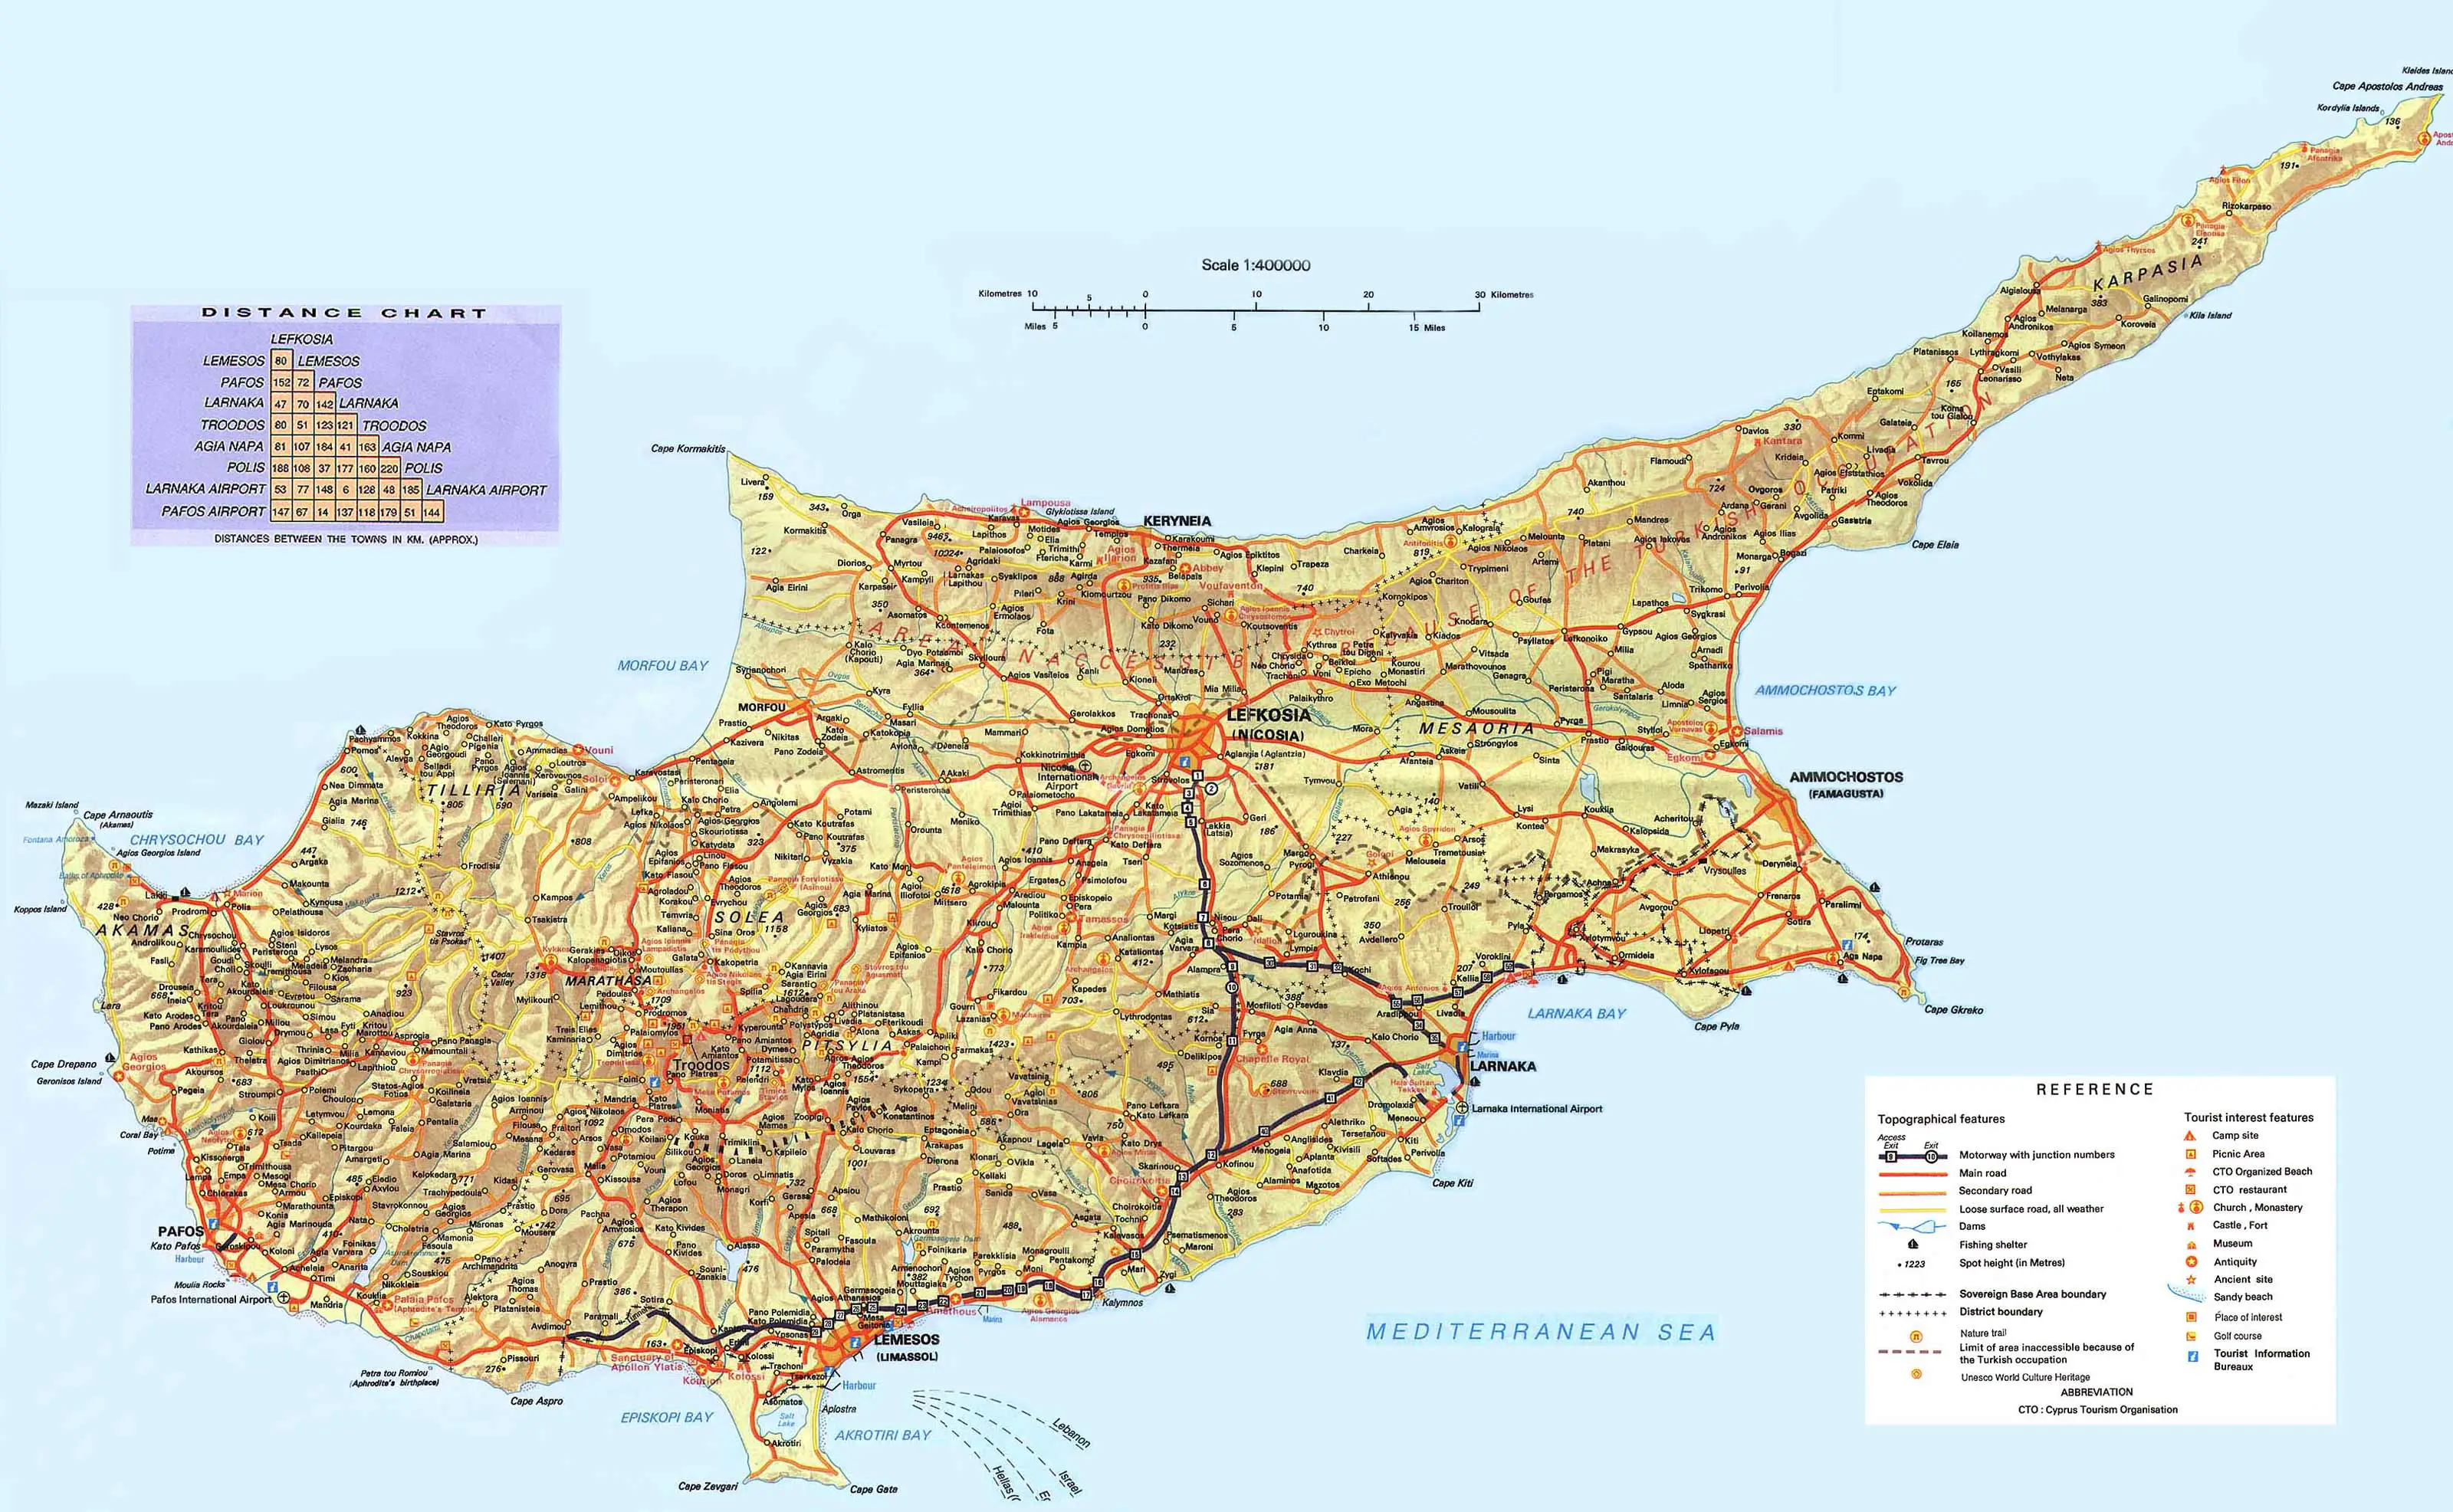 Cyprus Map